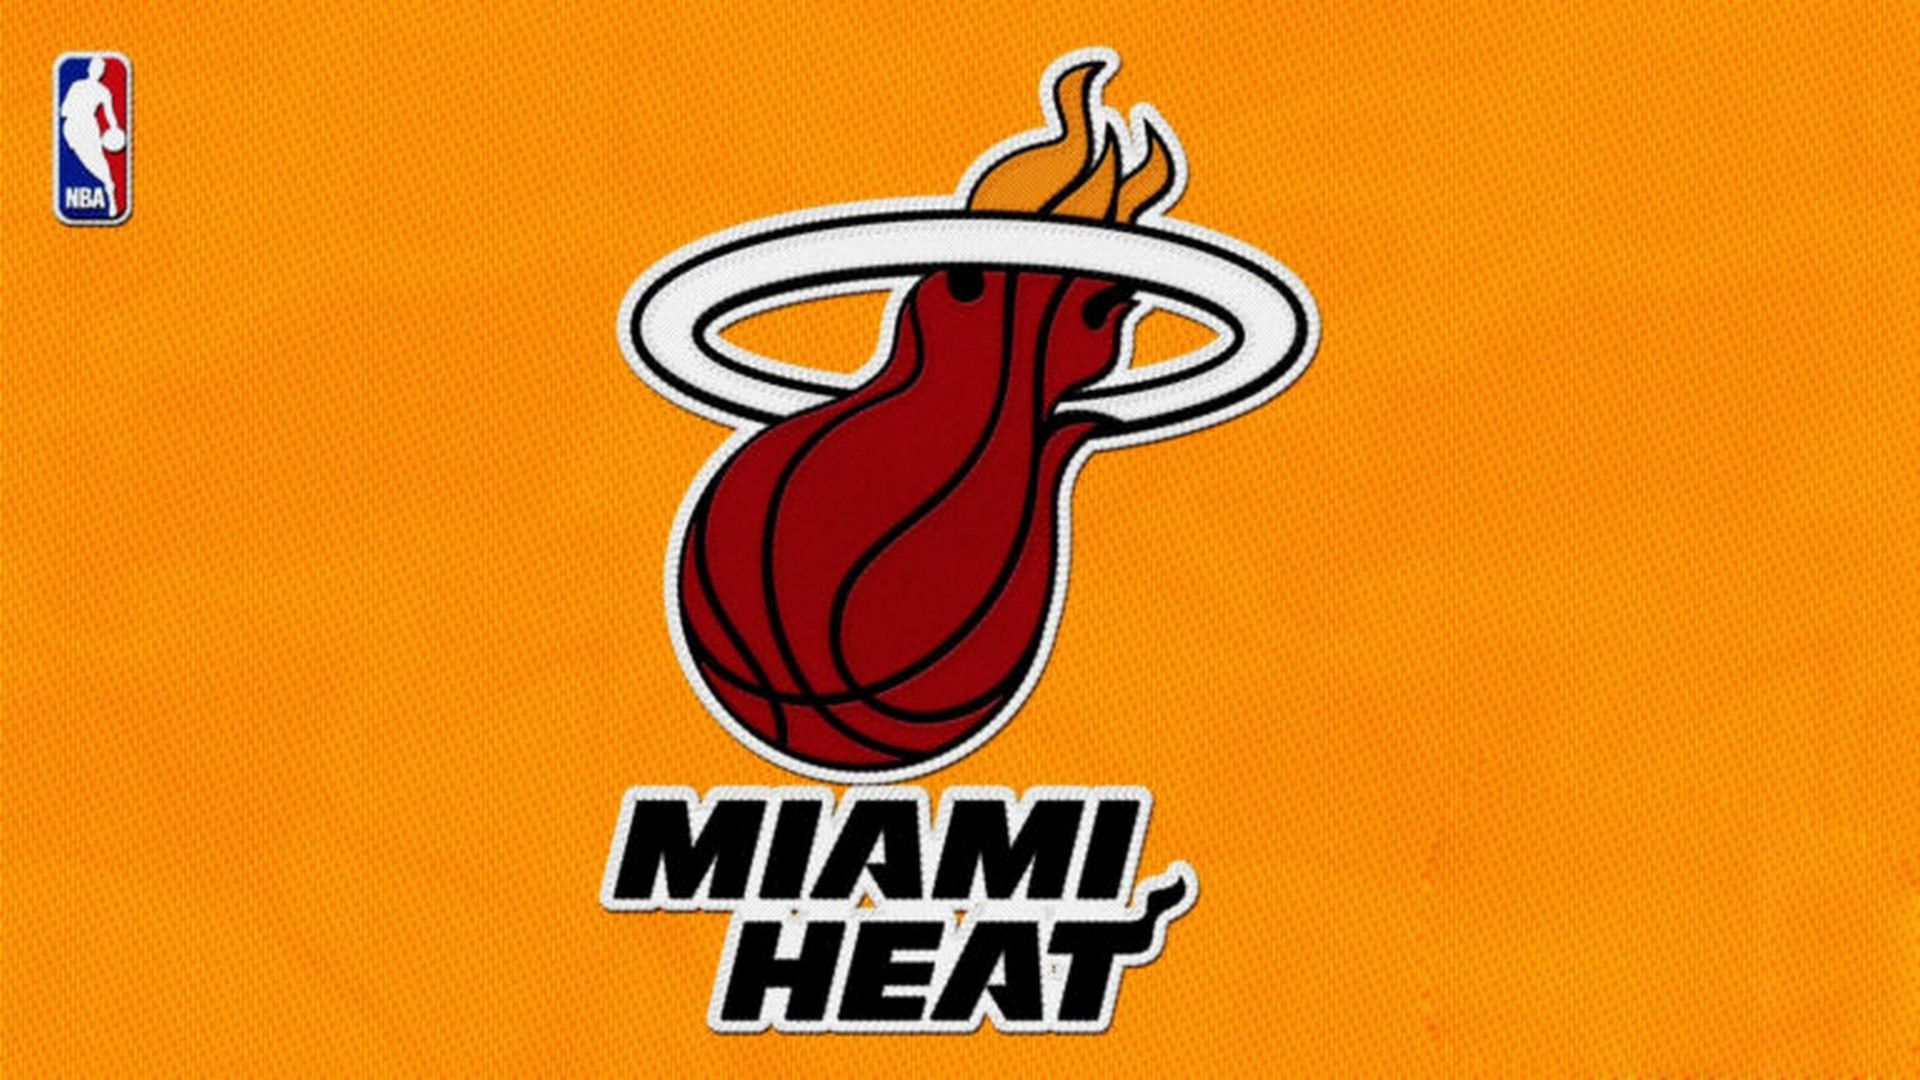 Miami Heat For PC Wallpaper Basketball Wallpaper. Miami heat, Miami heat logo, Nba miami heat